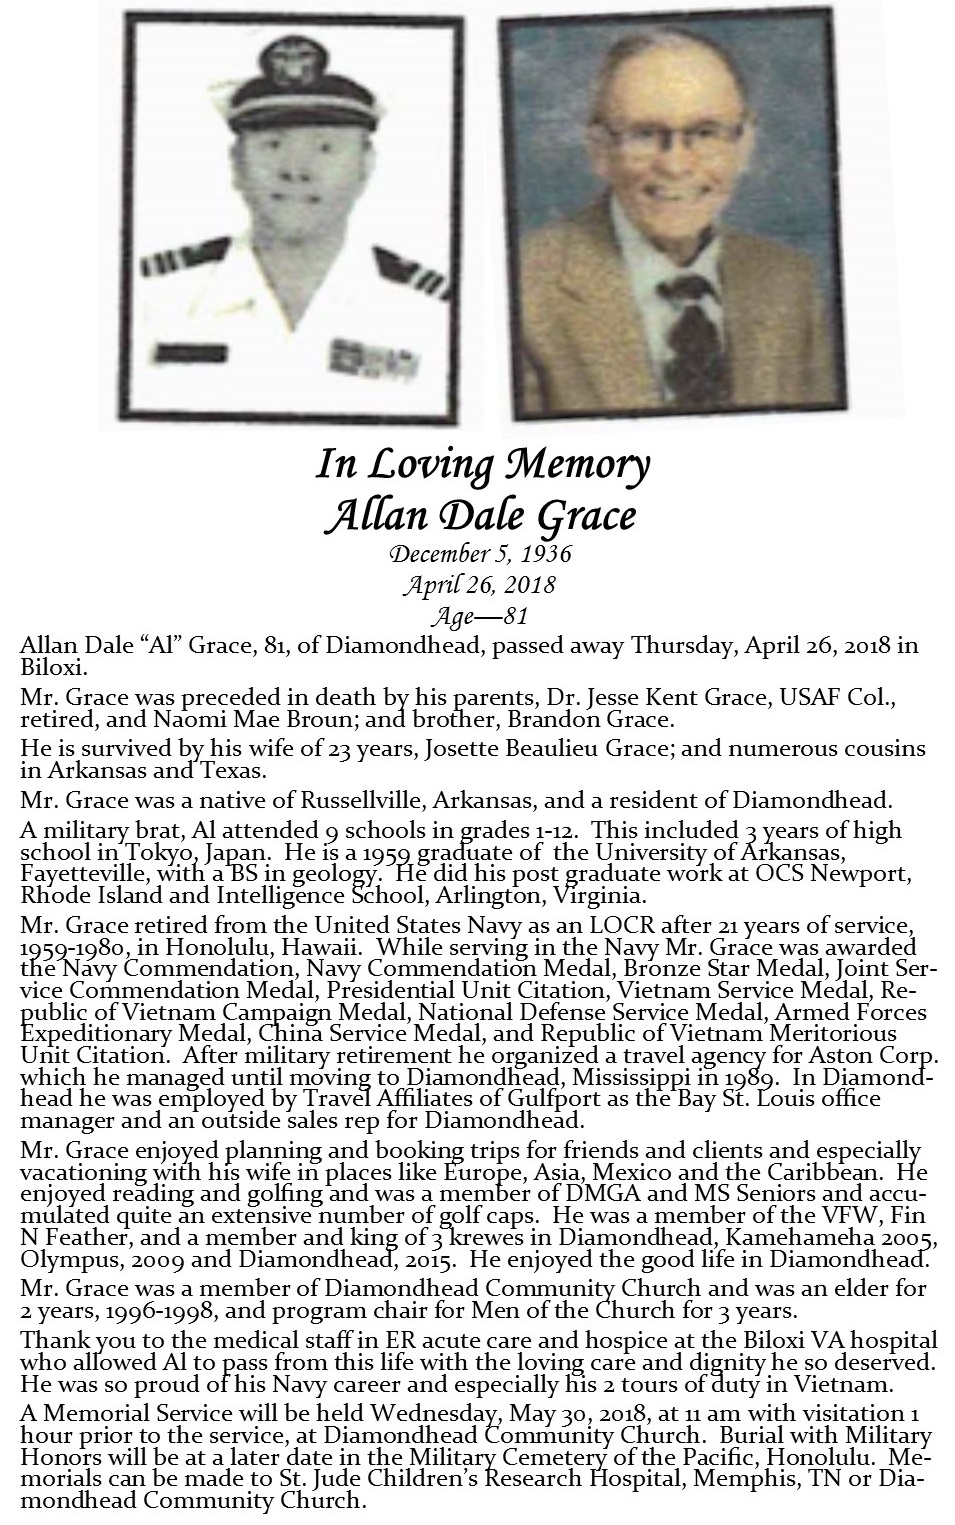 Allan Dale Grace Obituary